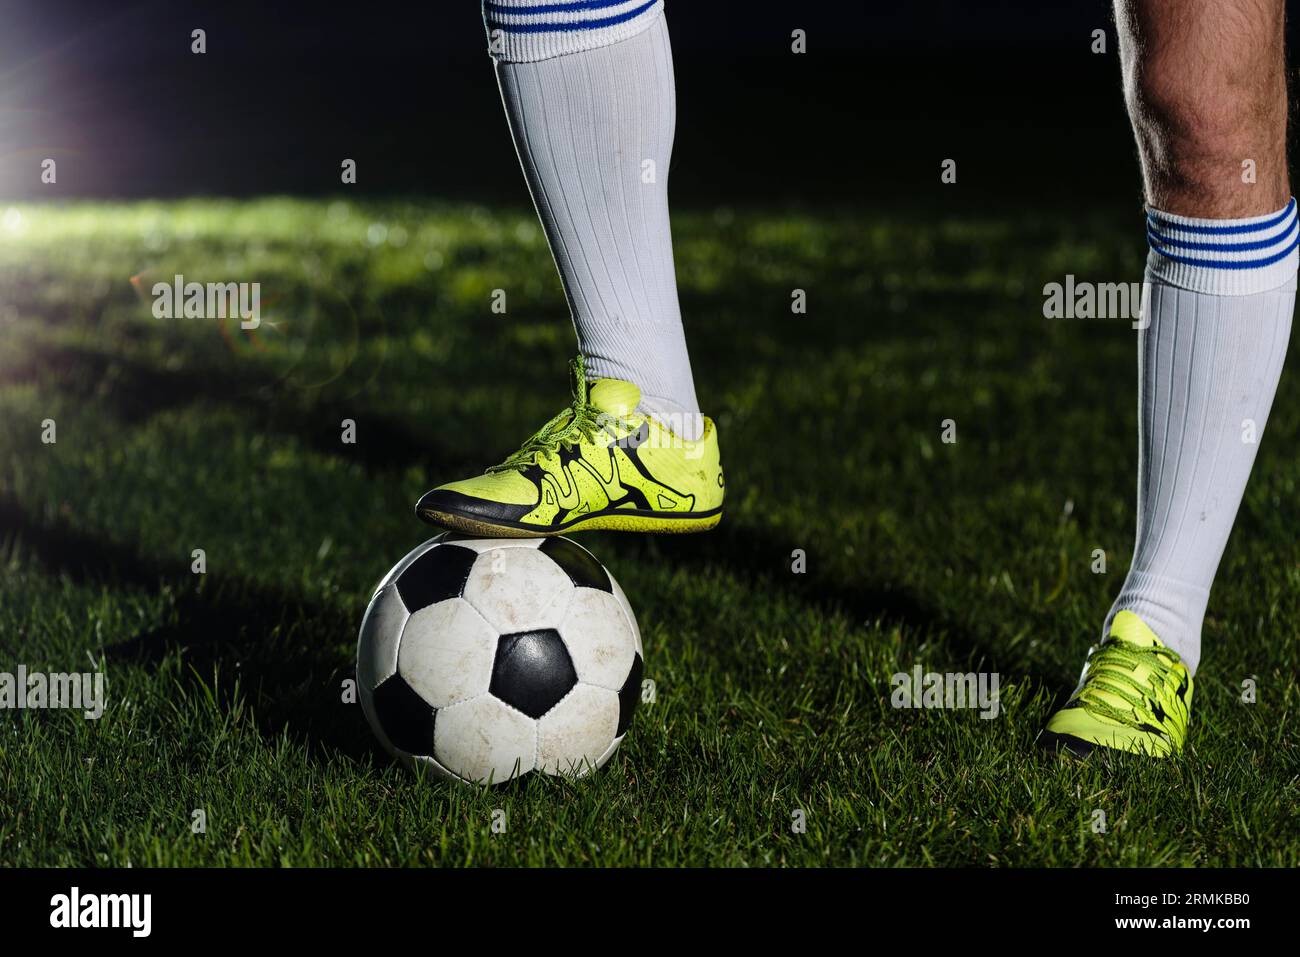 Crop legs stepping soccer ball Stock Photo